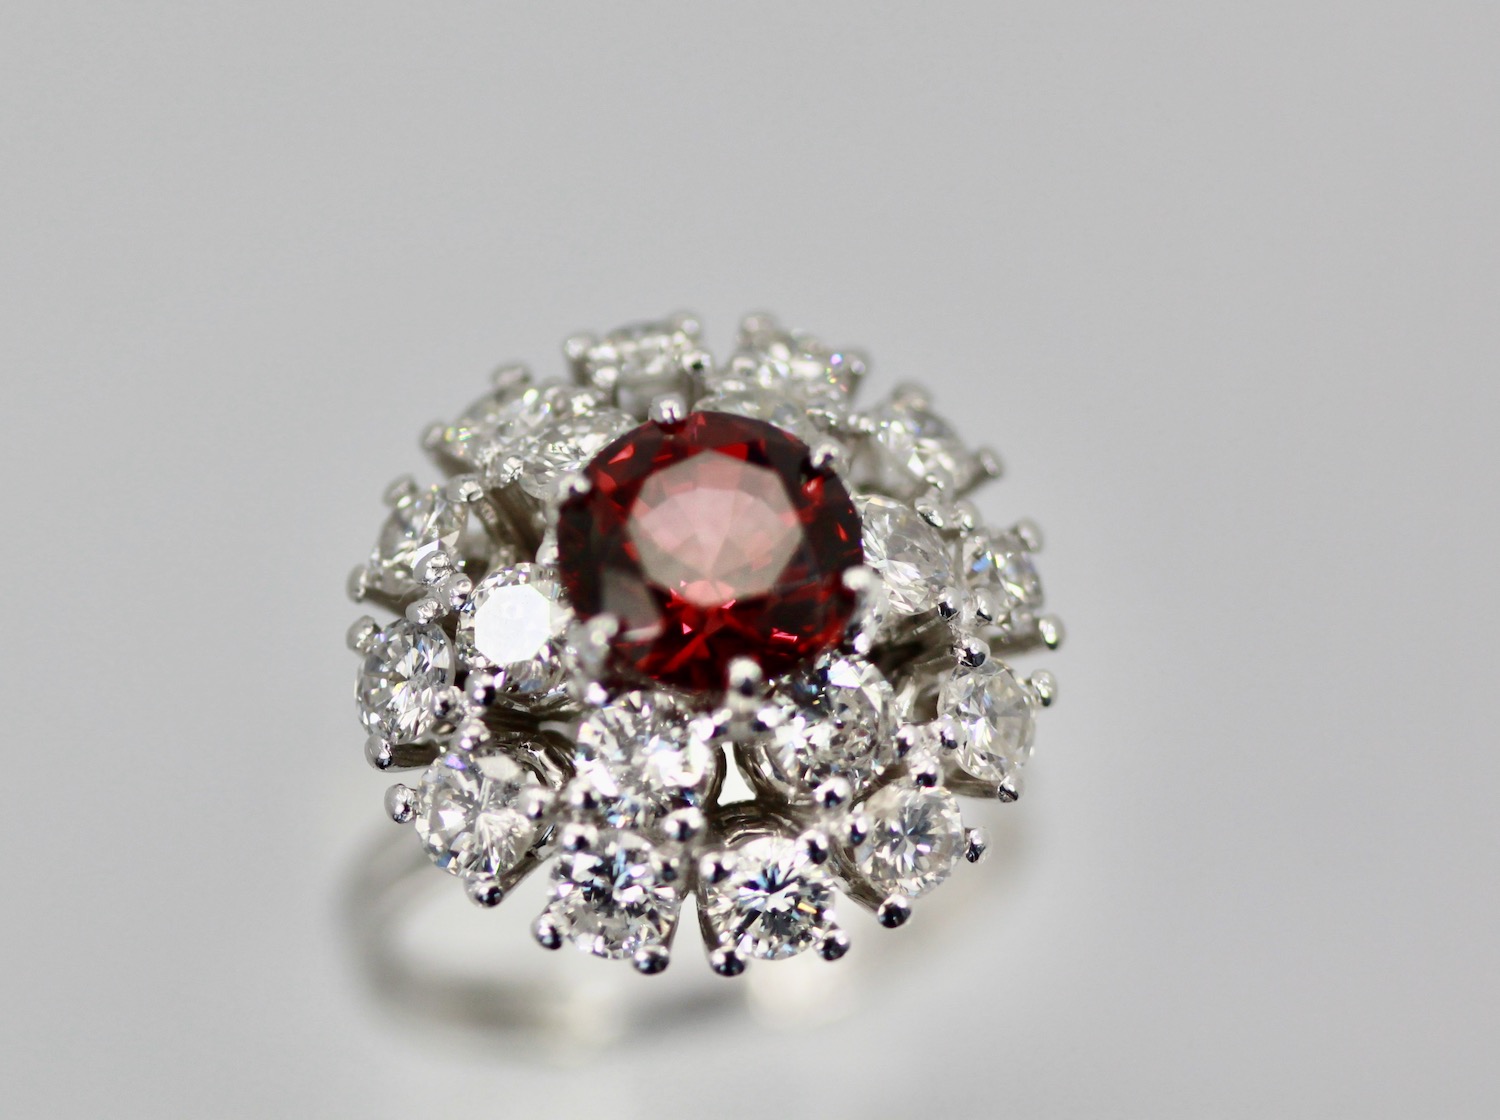 Natural Garnet Rhodolite Diamond Ring – close up